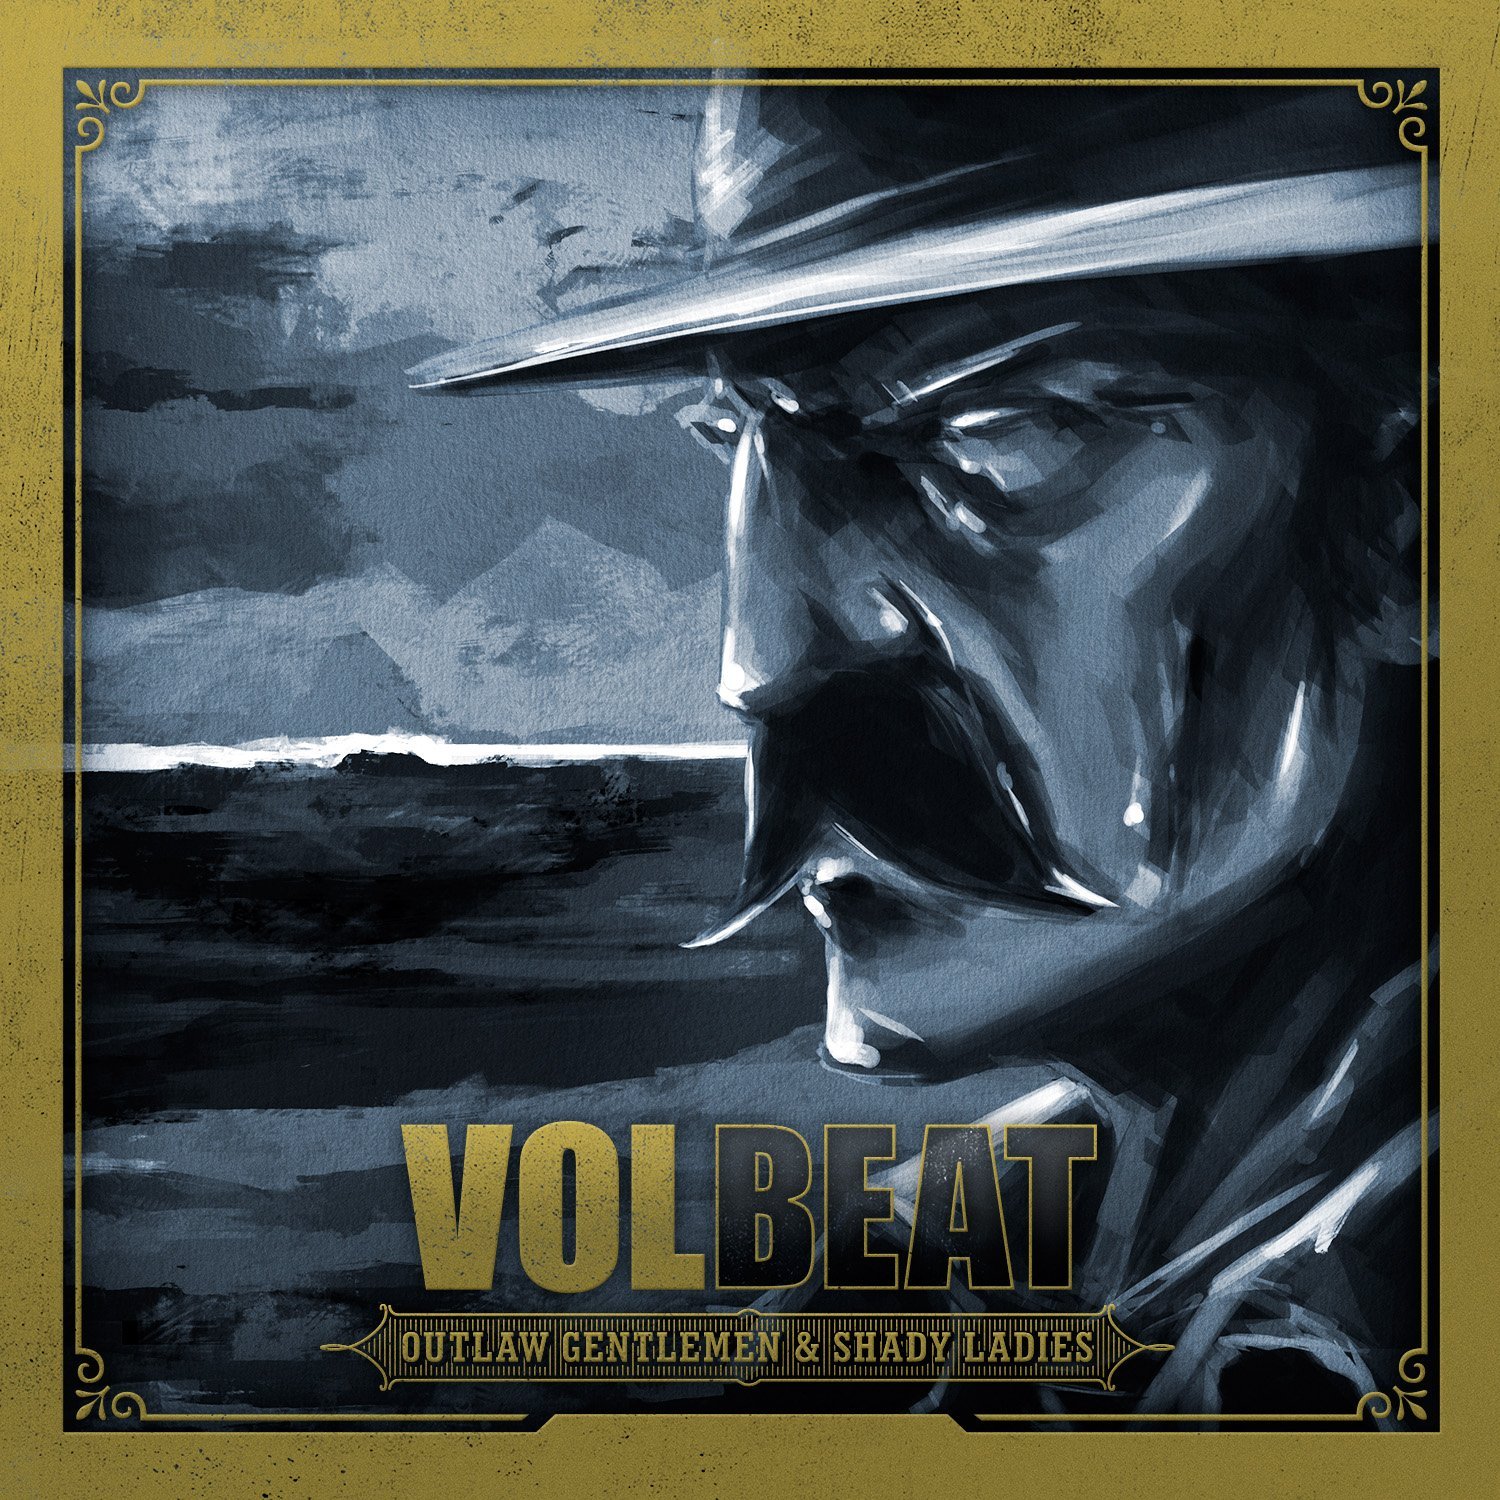 Volbeat - Outlaw Gentleman & Shady Ladies